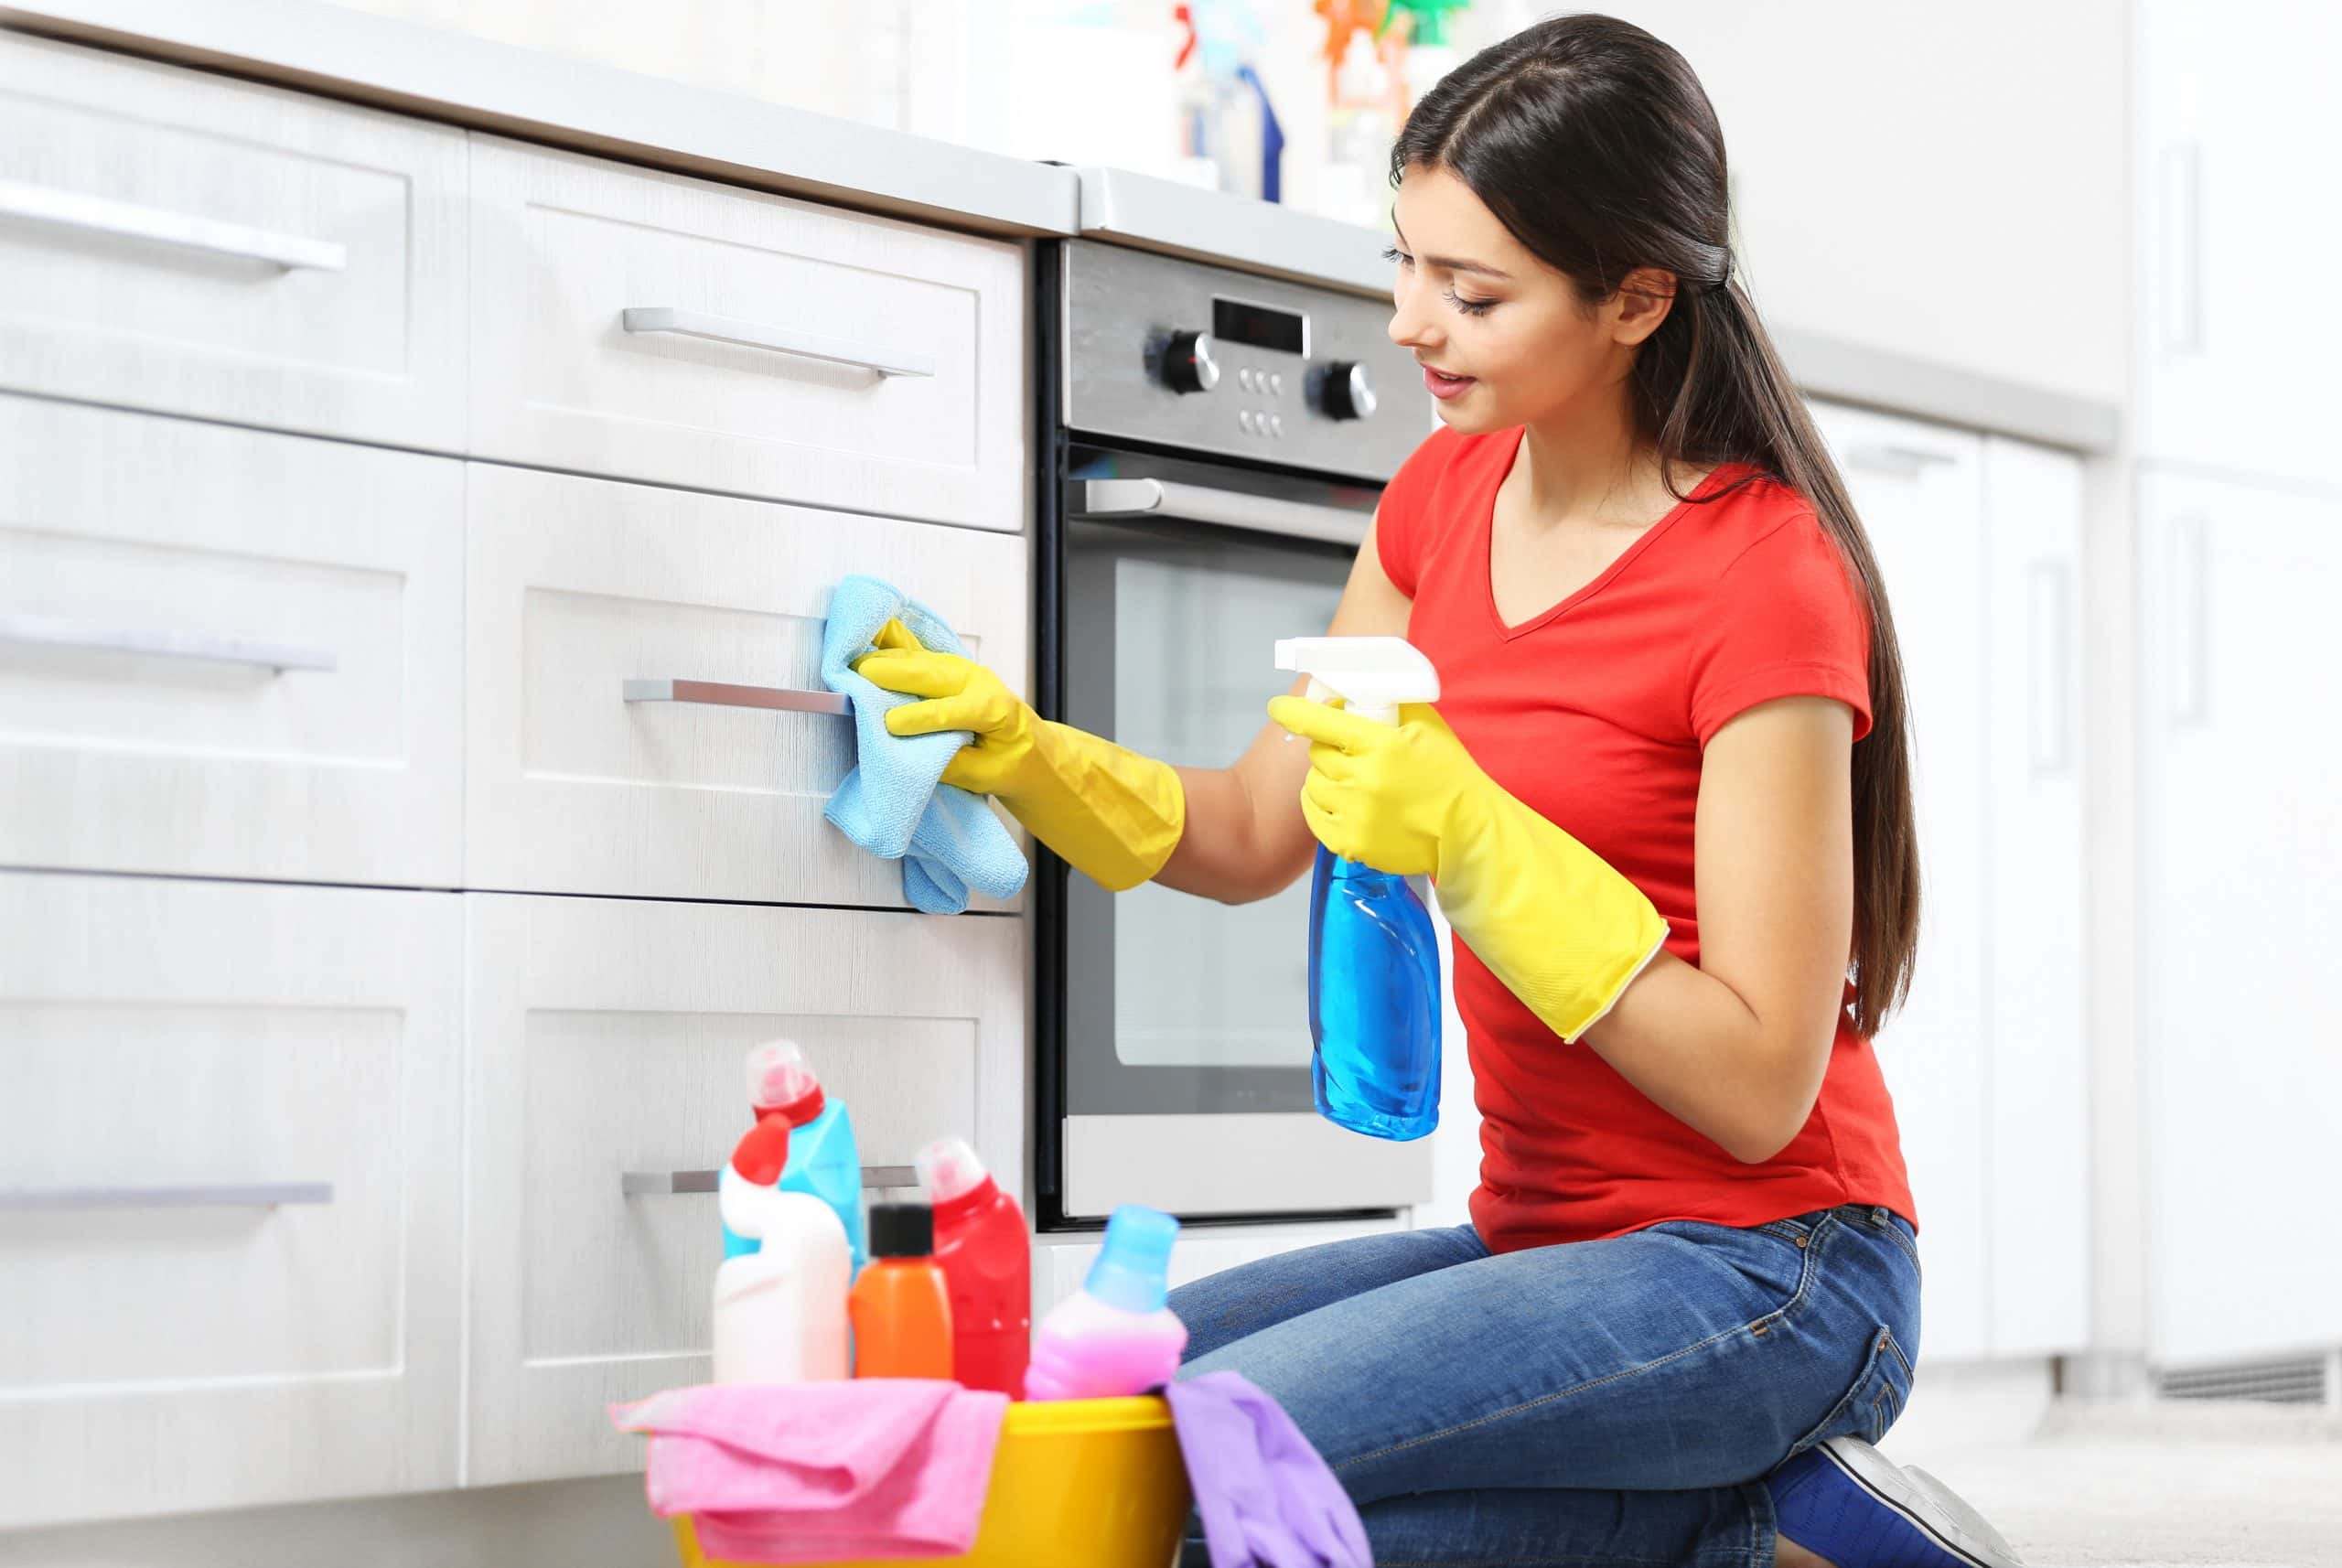  deep clean kitchen surfaces